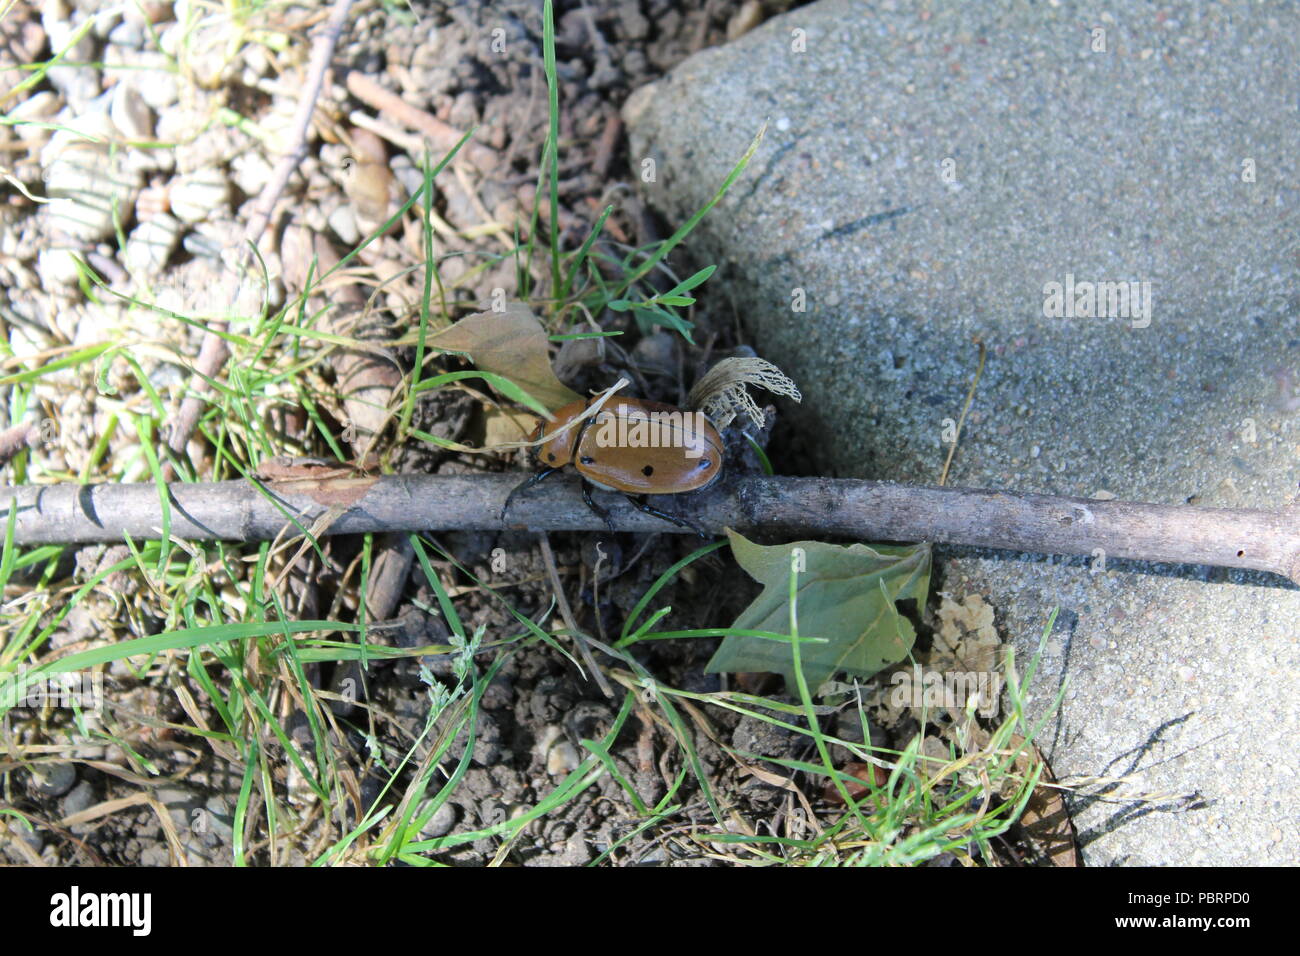 Bug on a Stick Stock Photo